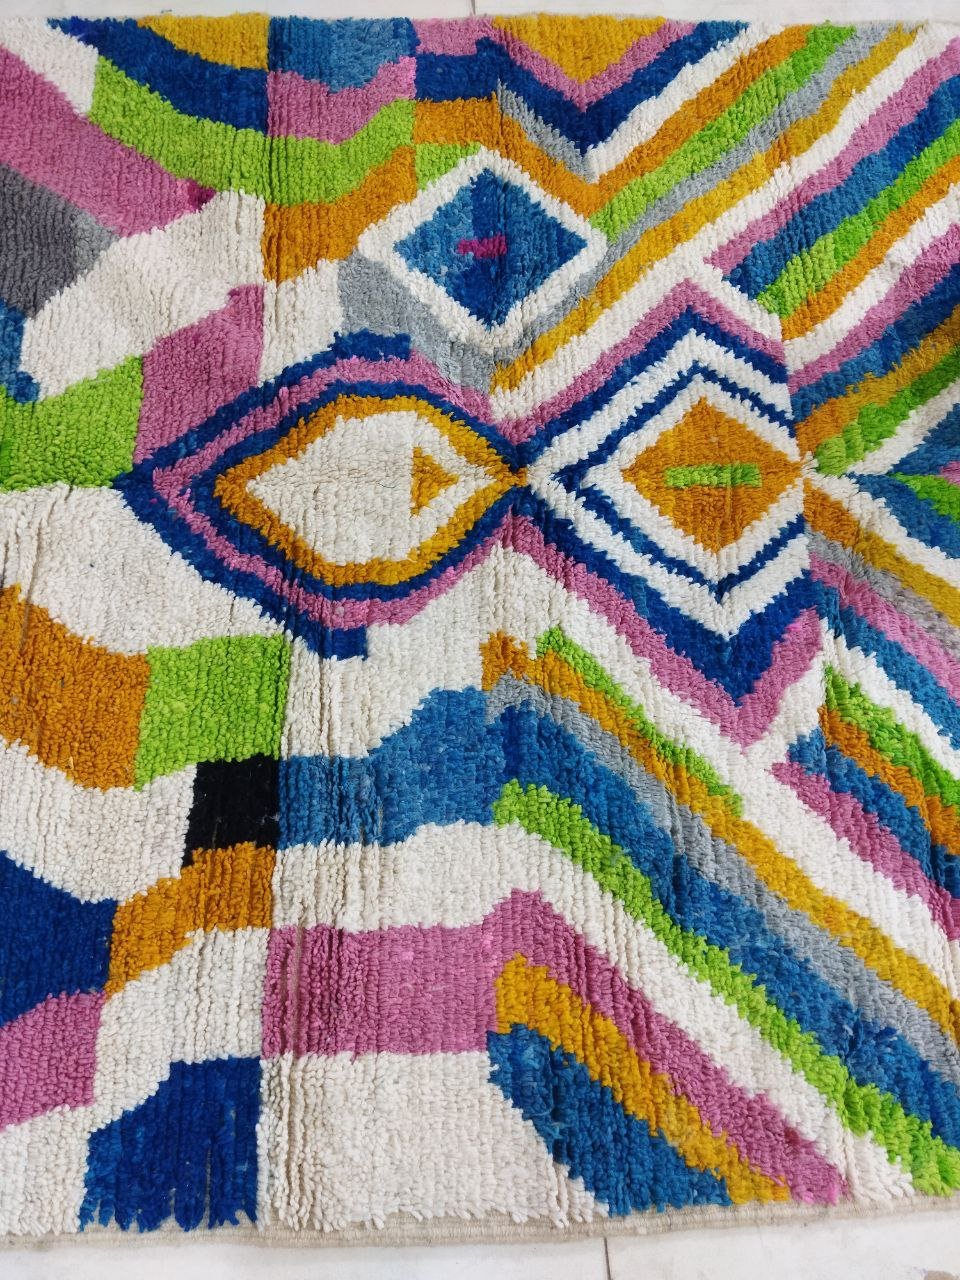 Moroccan rug Style Azilal rug 6x10 ft Handmade rug Colorful Area RugrugsMoroccan Rugs Handmade Beni Ourain Rug - Berber Rug